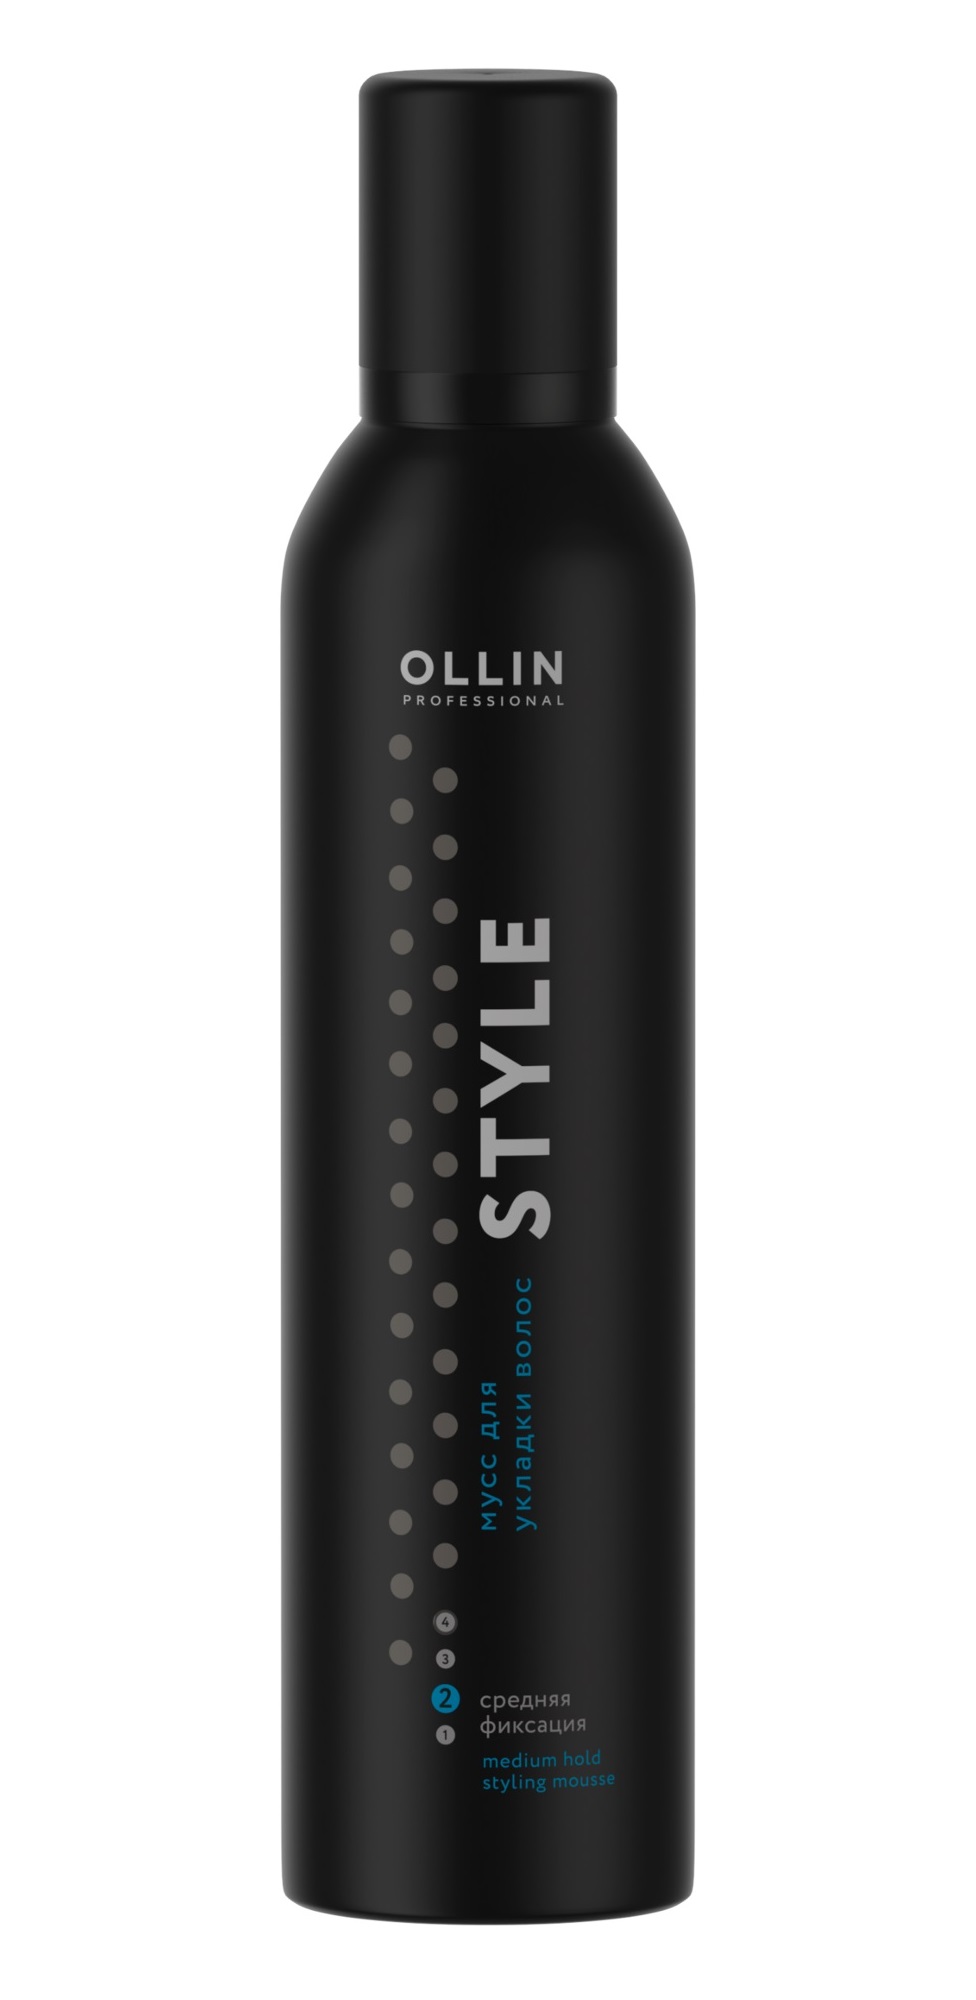 Ollin Professional Мусс для укладки волос средней фиксации, 